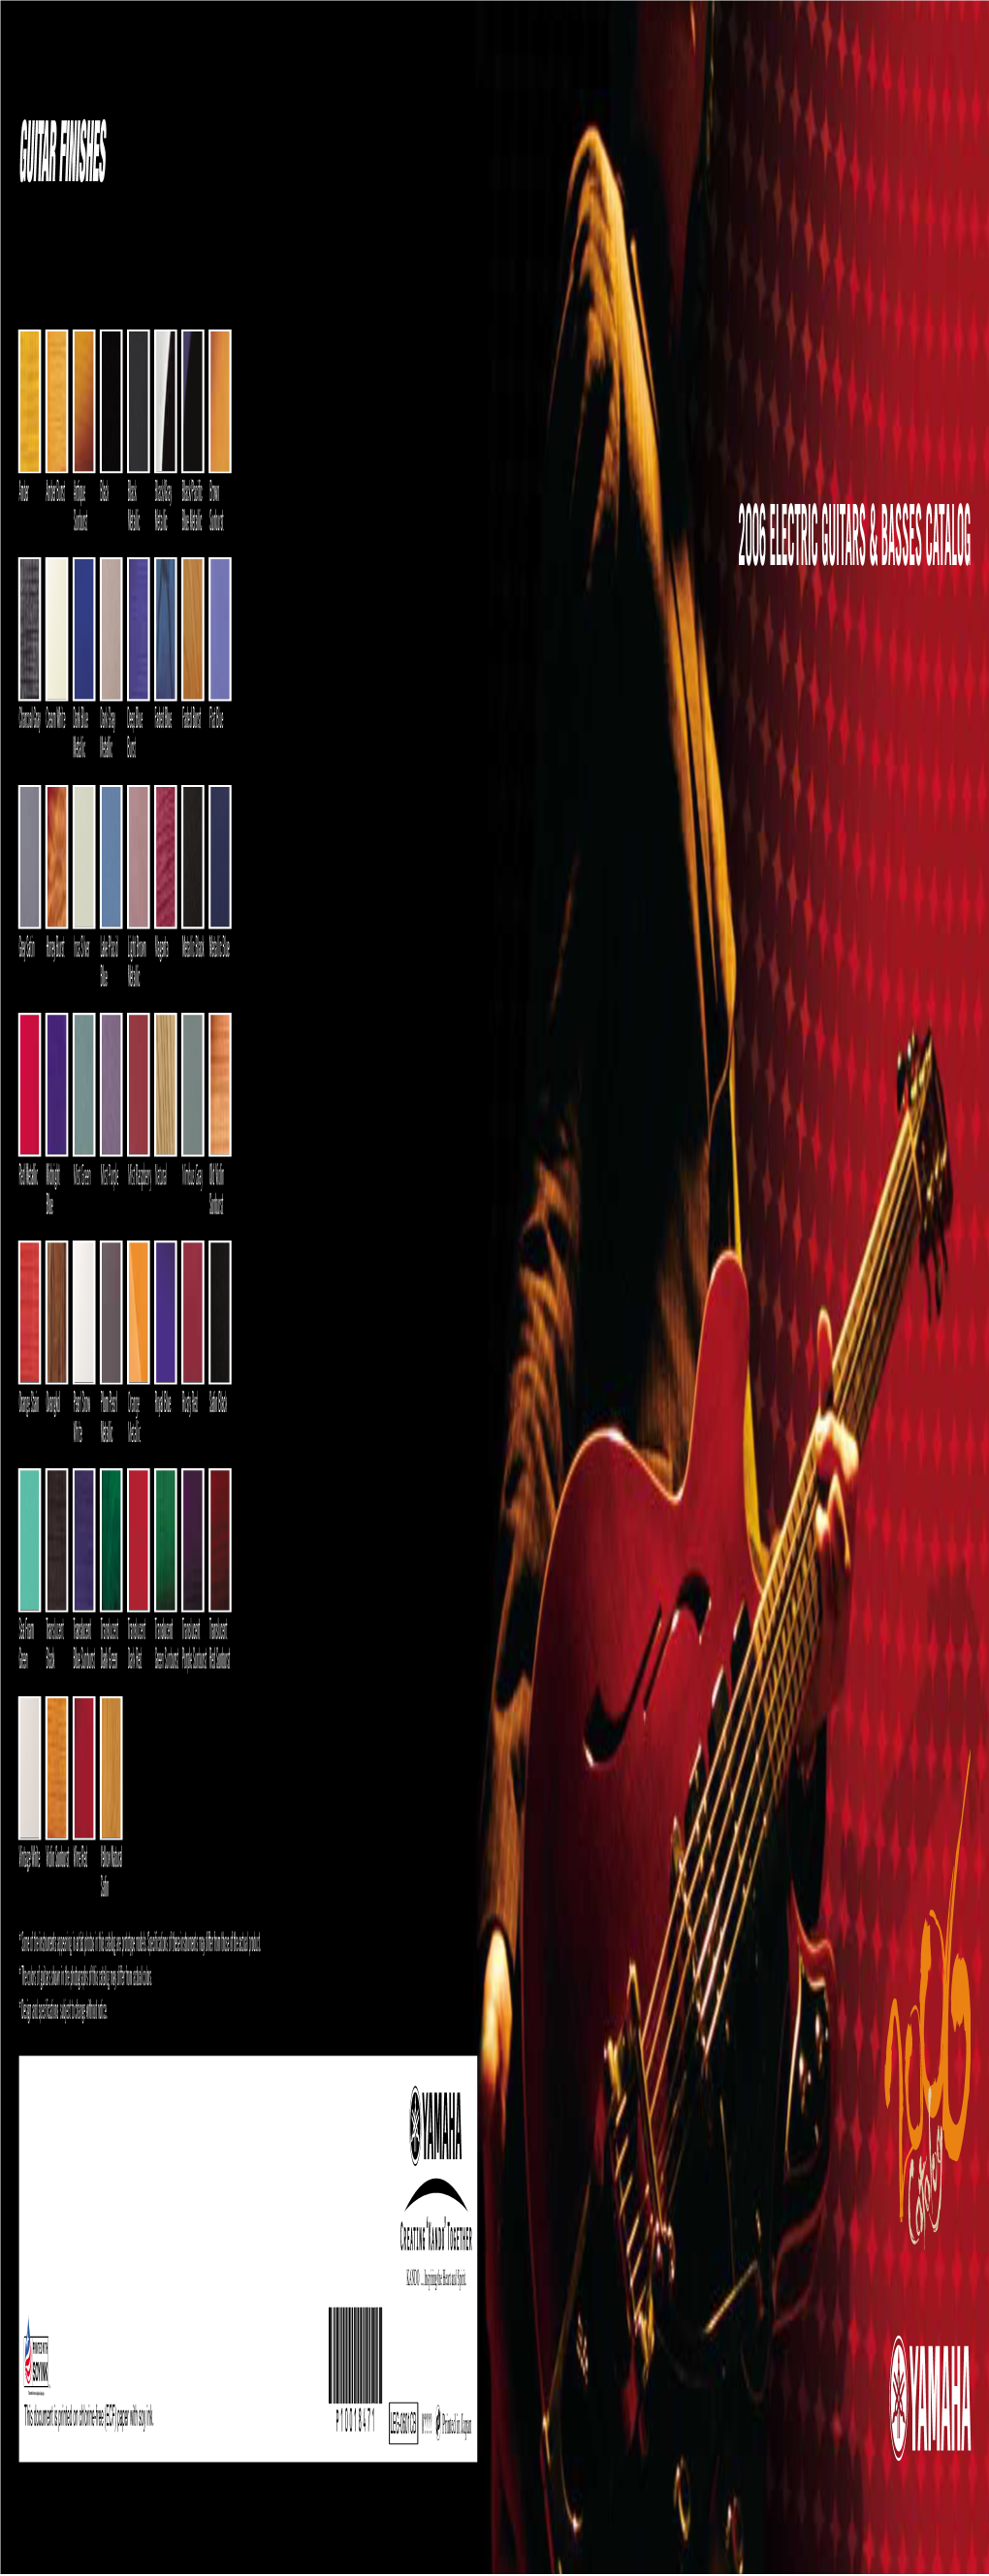 2006 Electric Guitars & Basses Catalog